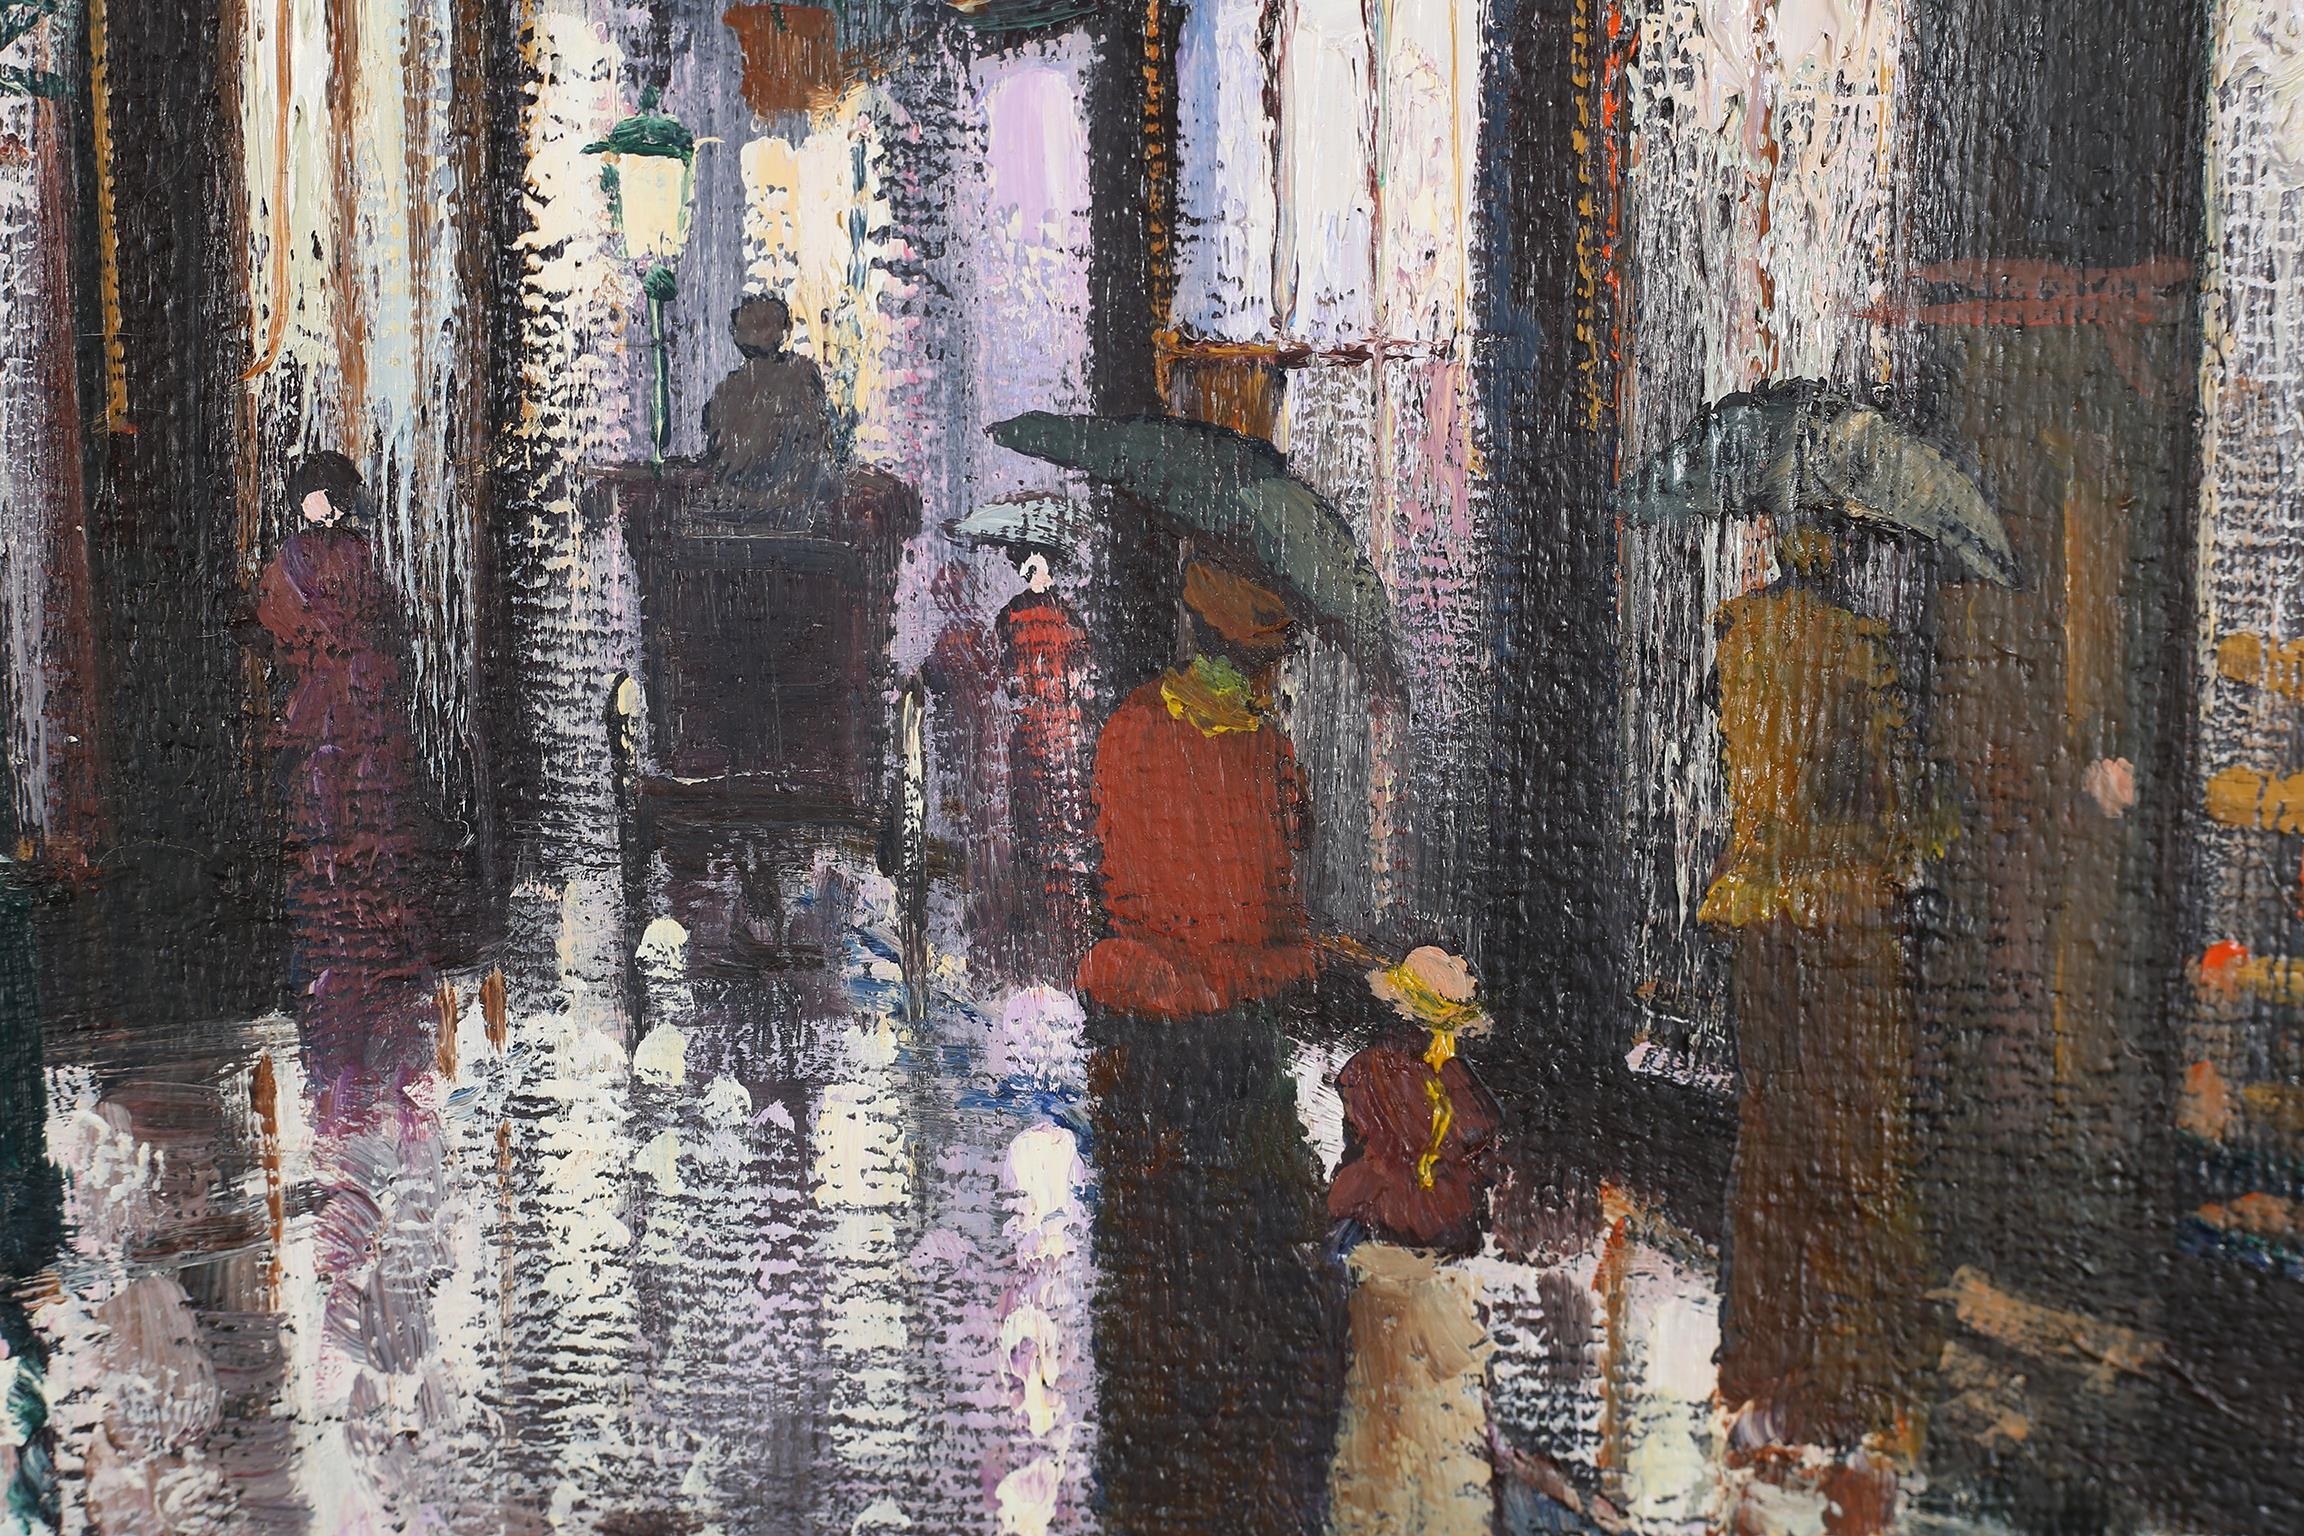 ARR Barry Hilton (b 1941), Edwardian street scene with figures on a rainy night, oil on canvas, - Image 5 of 5